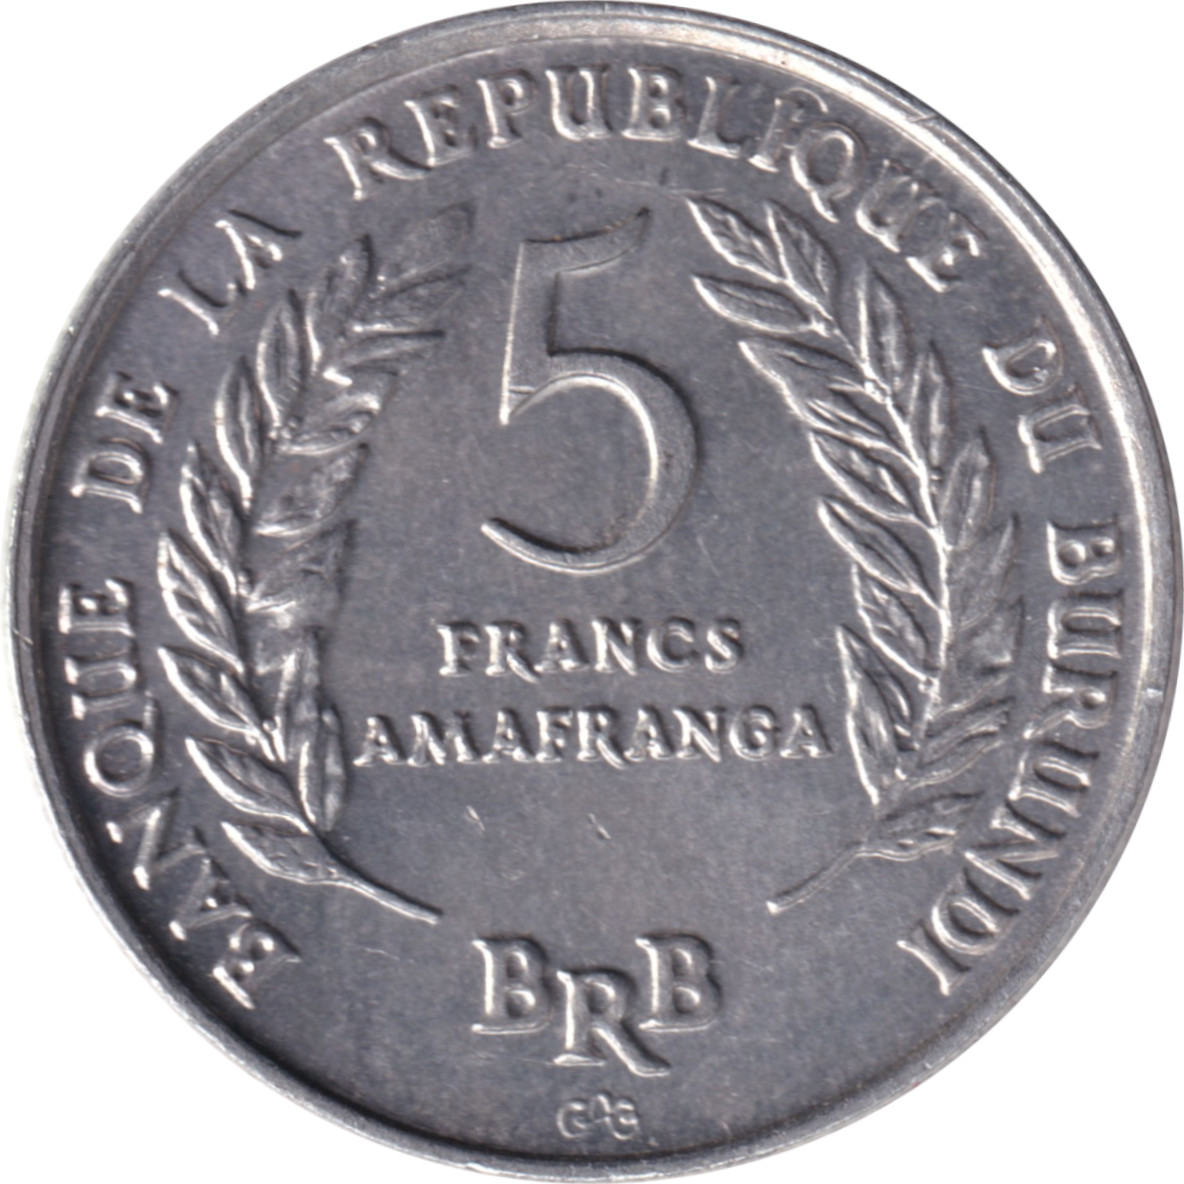 5 francs - Shield